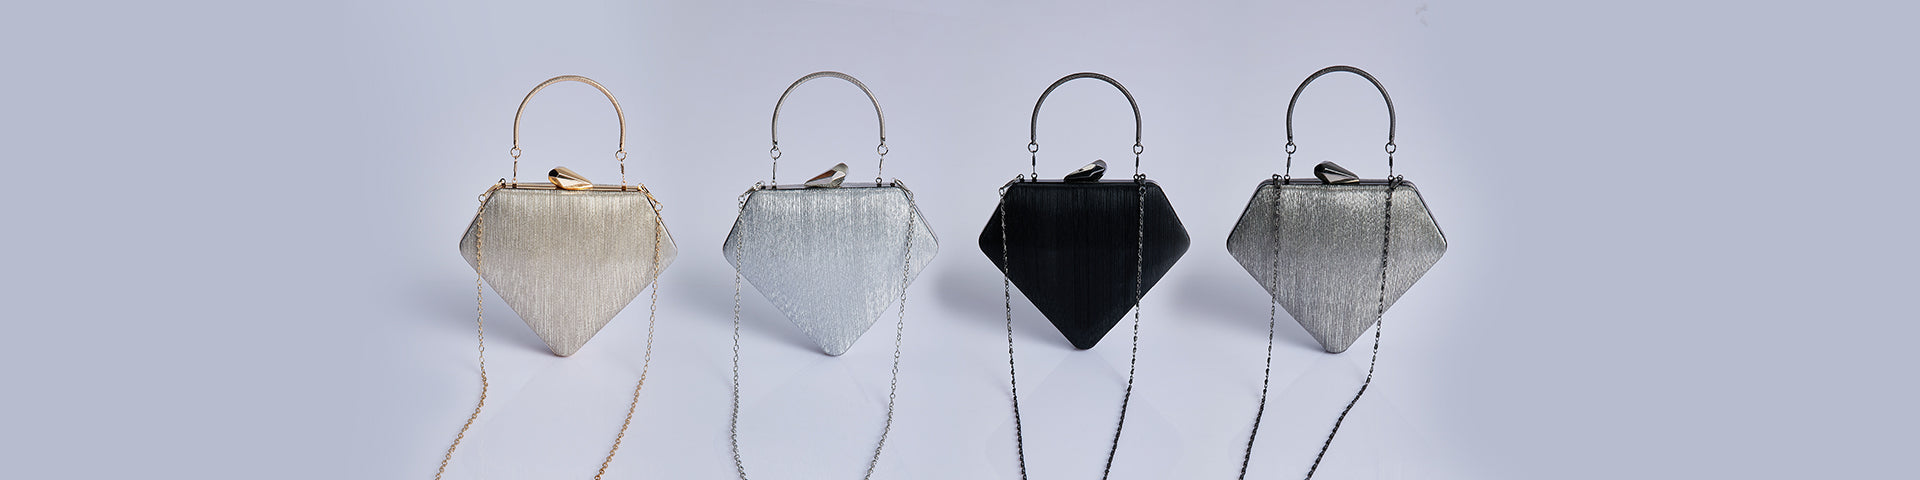 Buy Tooba Handicraft Navy Blue Glitter Women Designer Clutch Bag With Chain  Strap Online at Best Prices in India - JioMart.